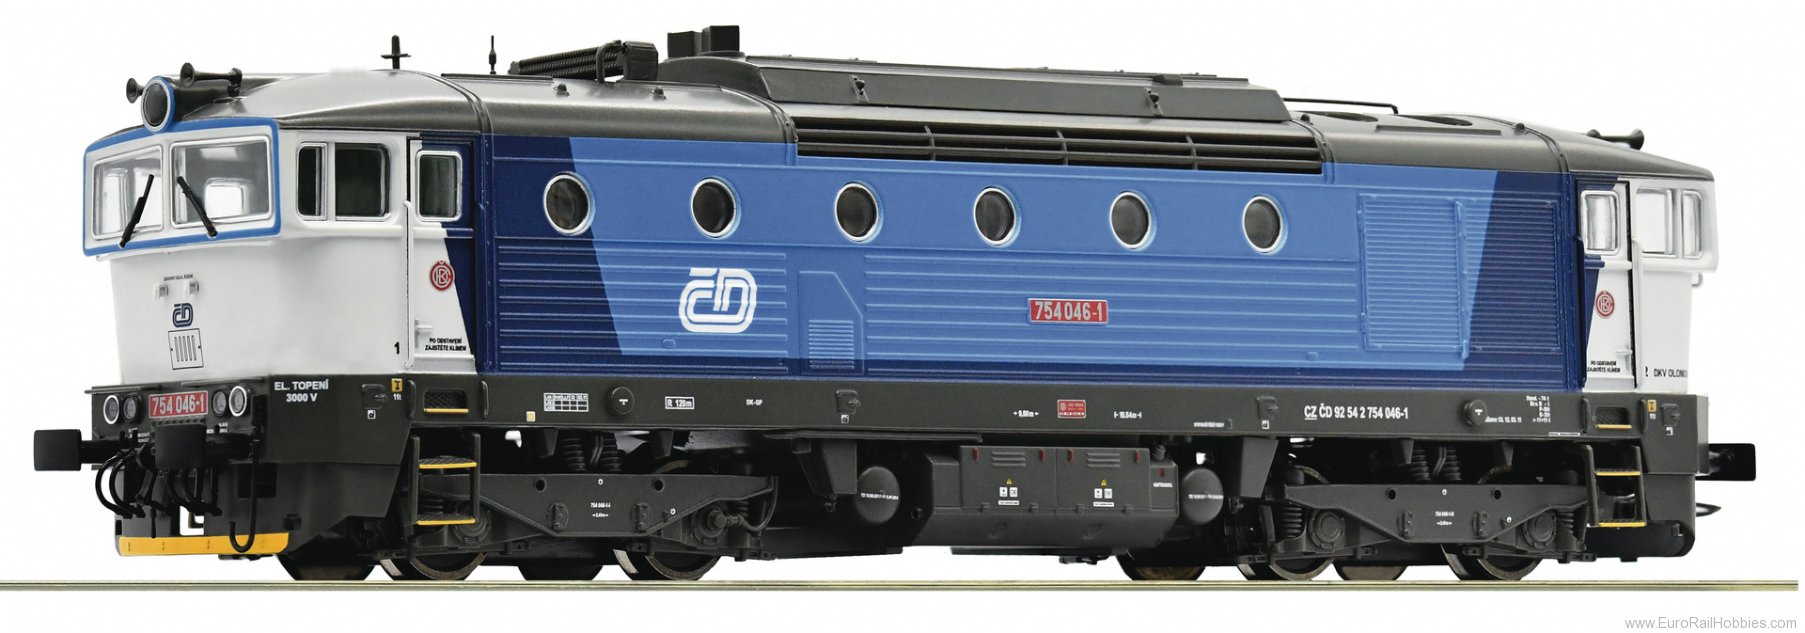 Roco 71023 CD Diesel locomotive class 754, 